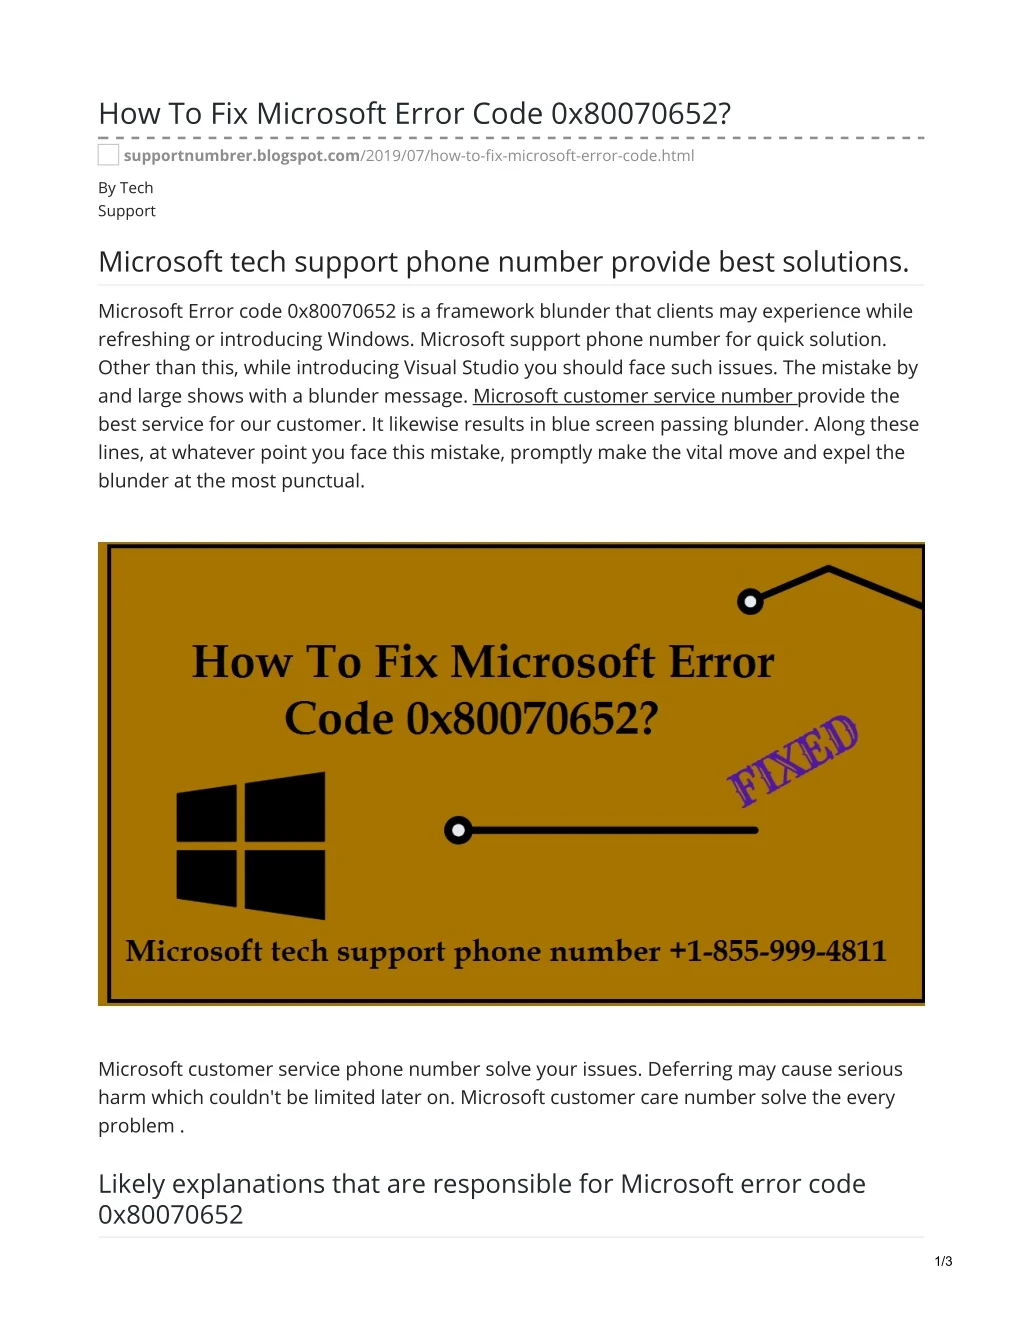 how to fix microsoft error code 0x80070652